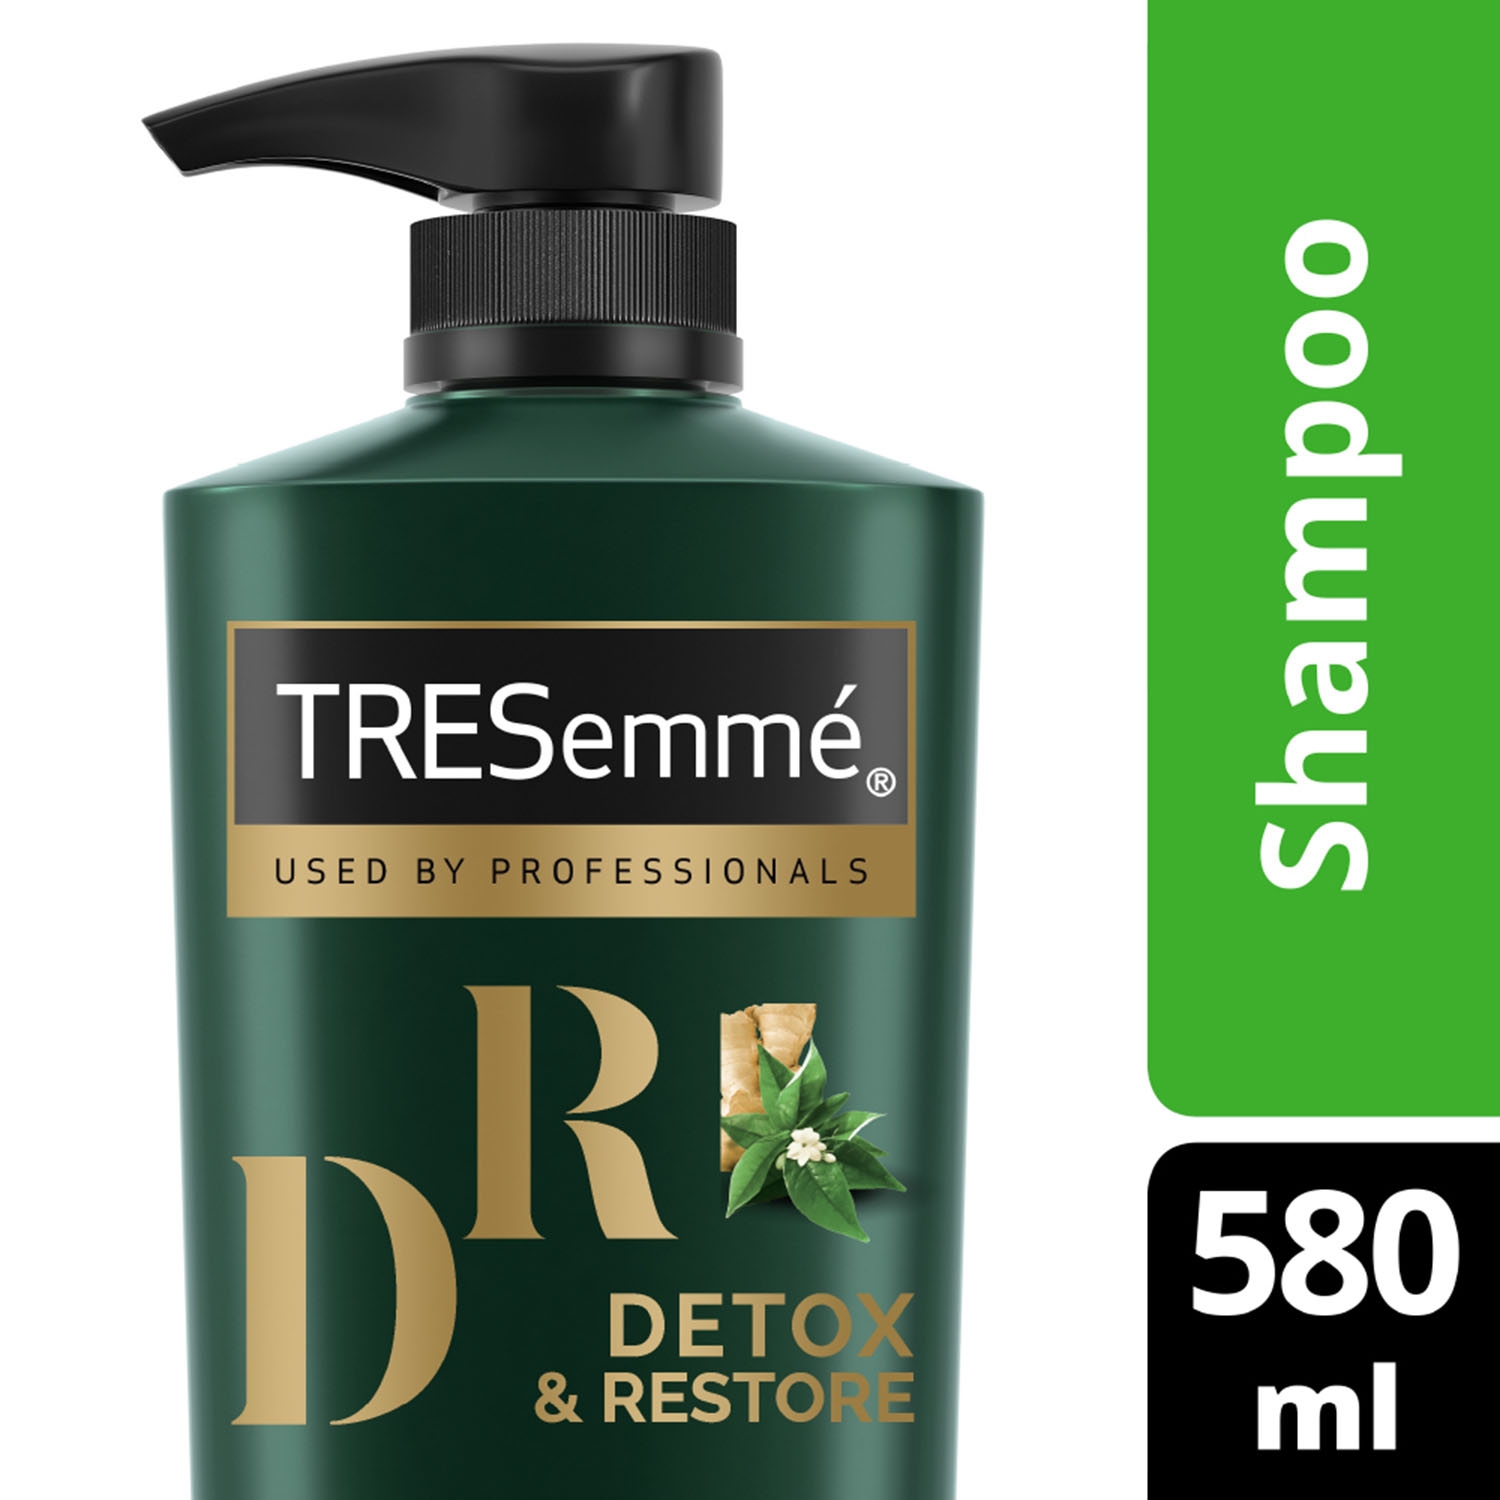 Tresemme | Tresemme Botanique Detox & Restore Shampoo - (580ml)